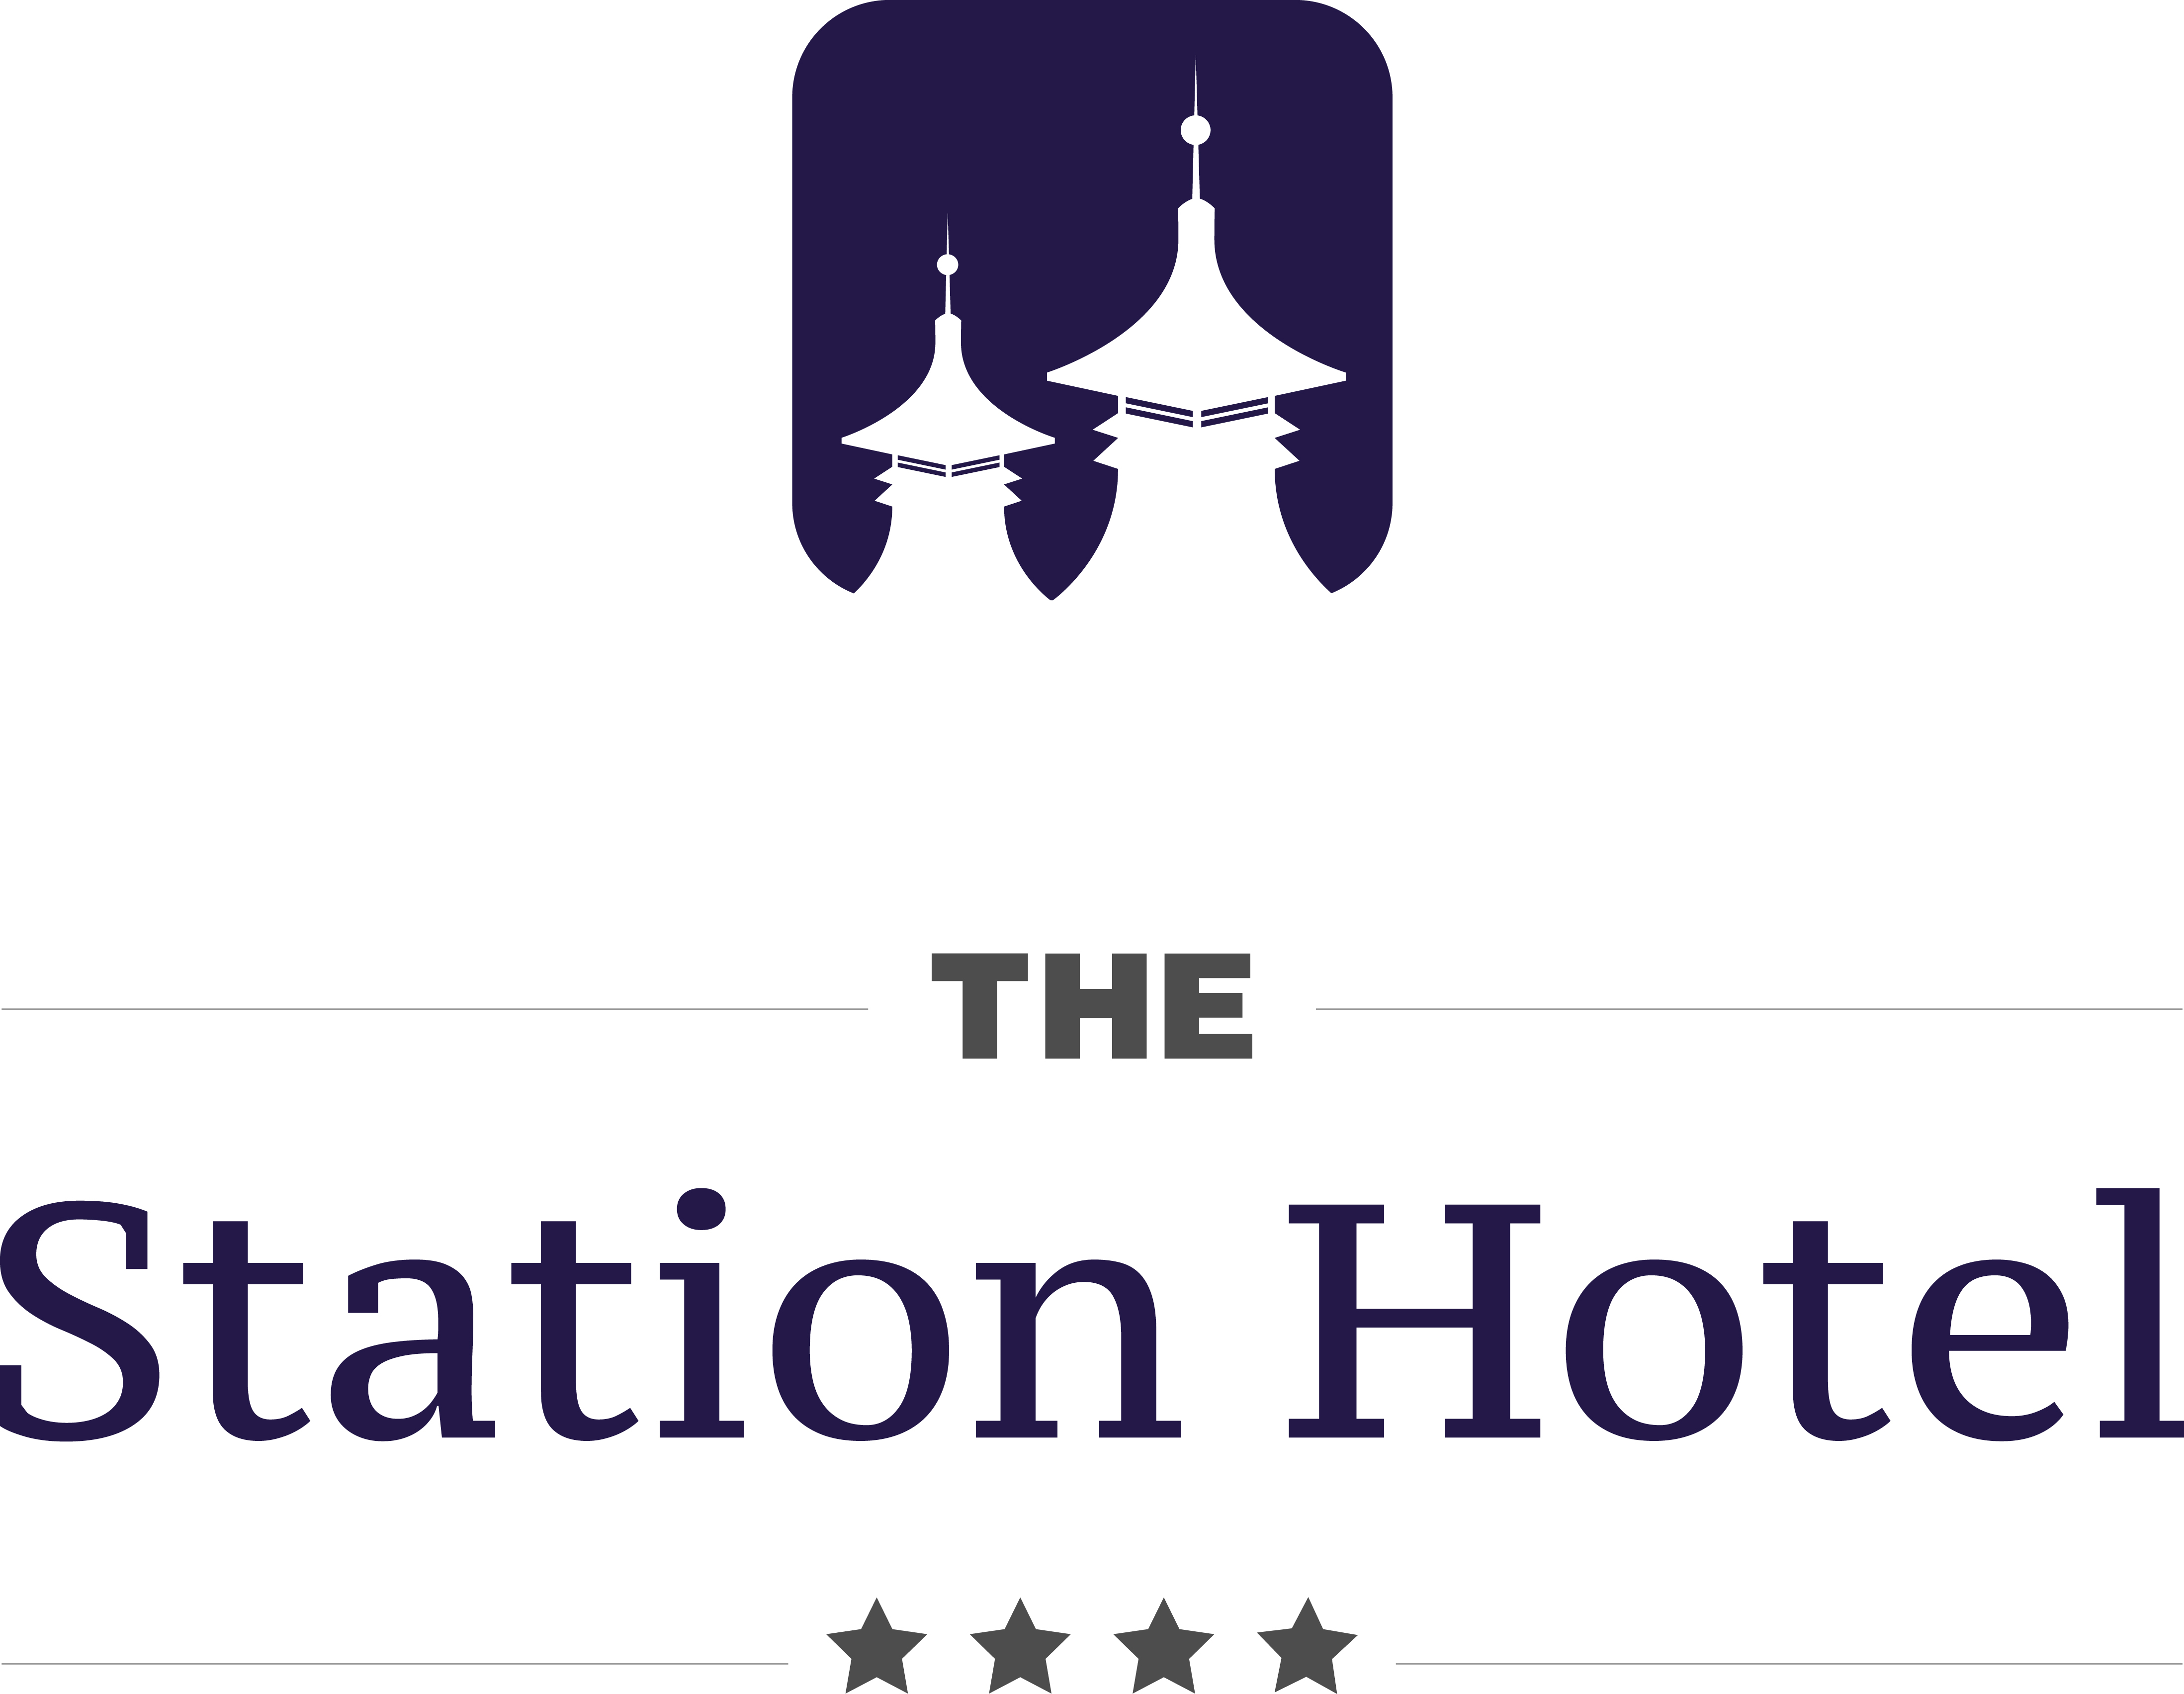 The Station Hotel logo